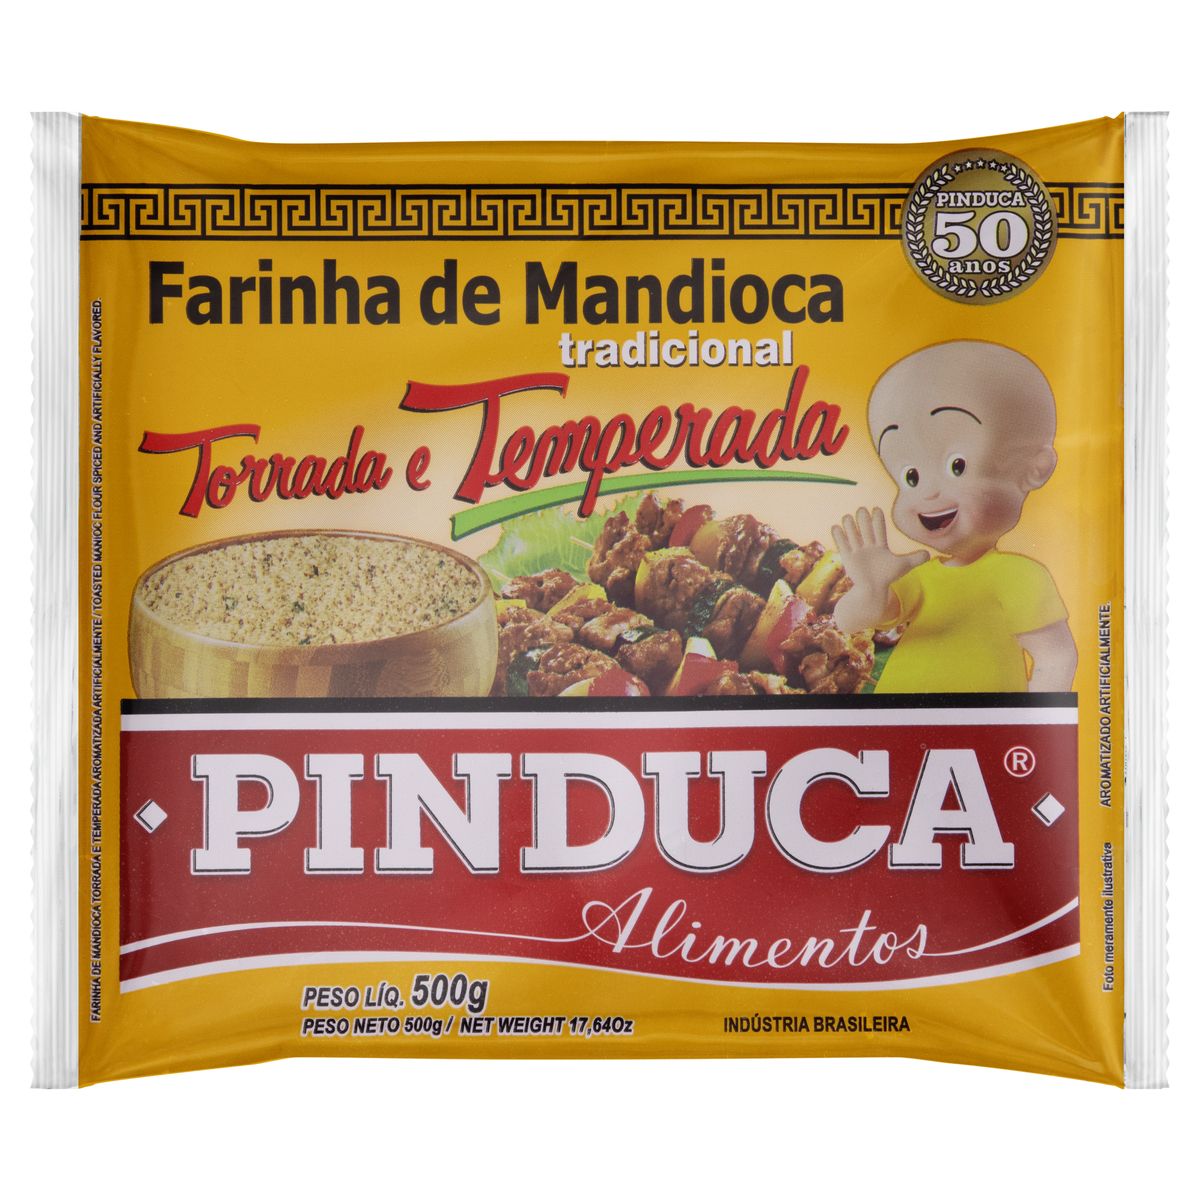 Farinha de Mandioca Pinduca Torrada e Temperada Tradicional 500g